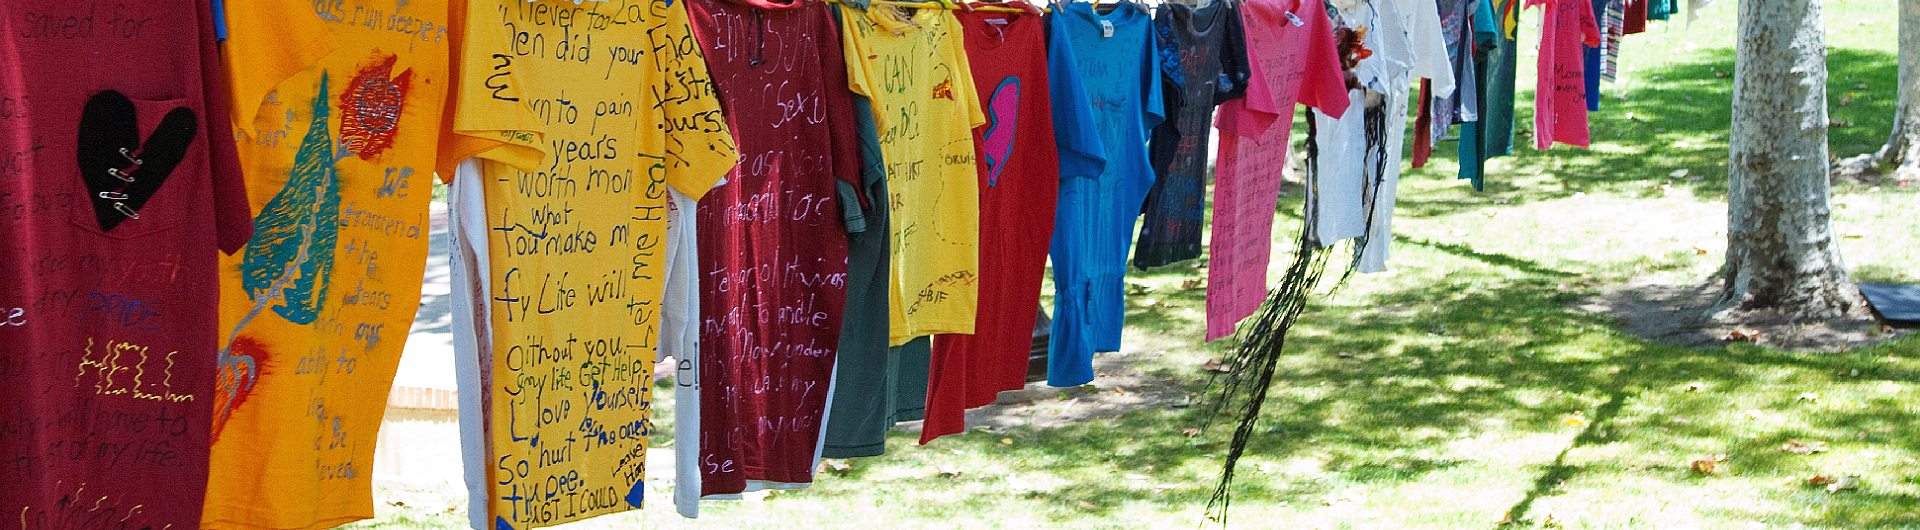 Colorful shirts hung on a clothesline